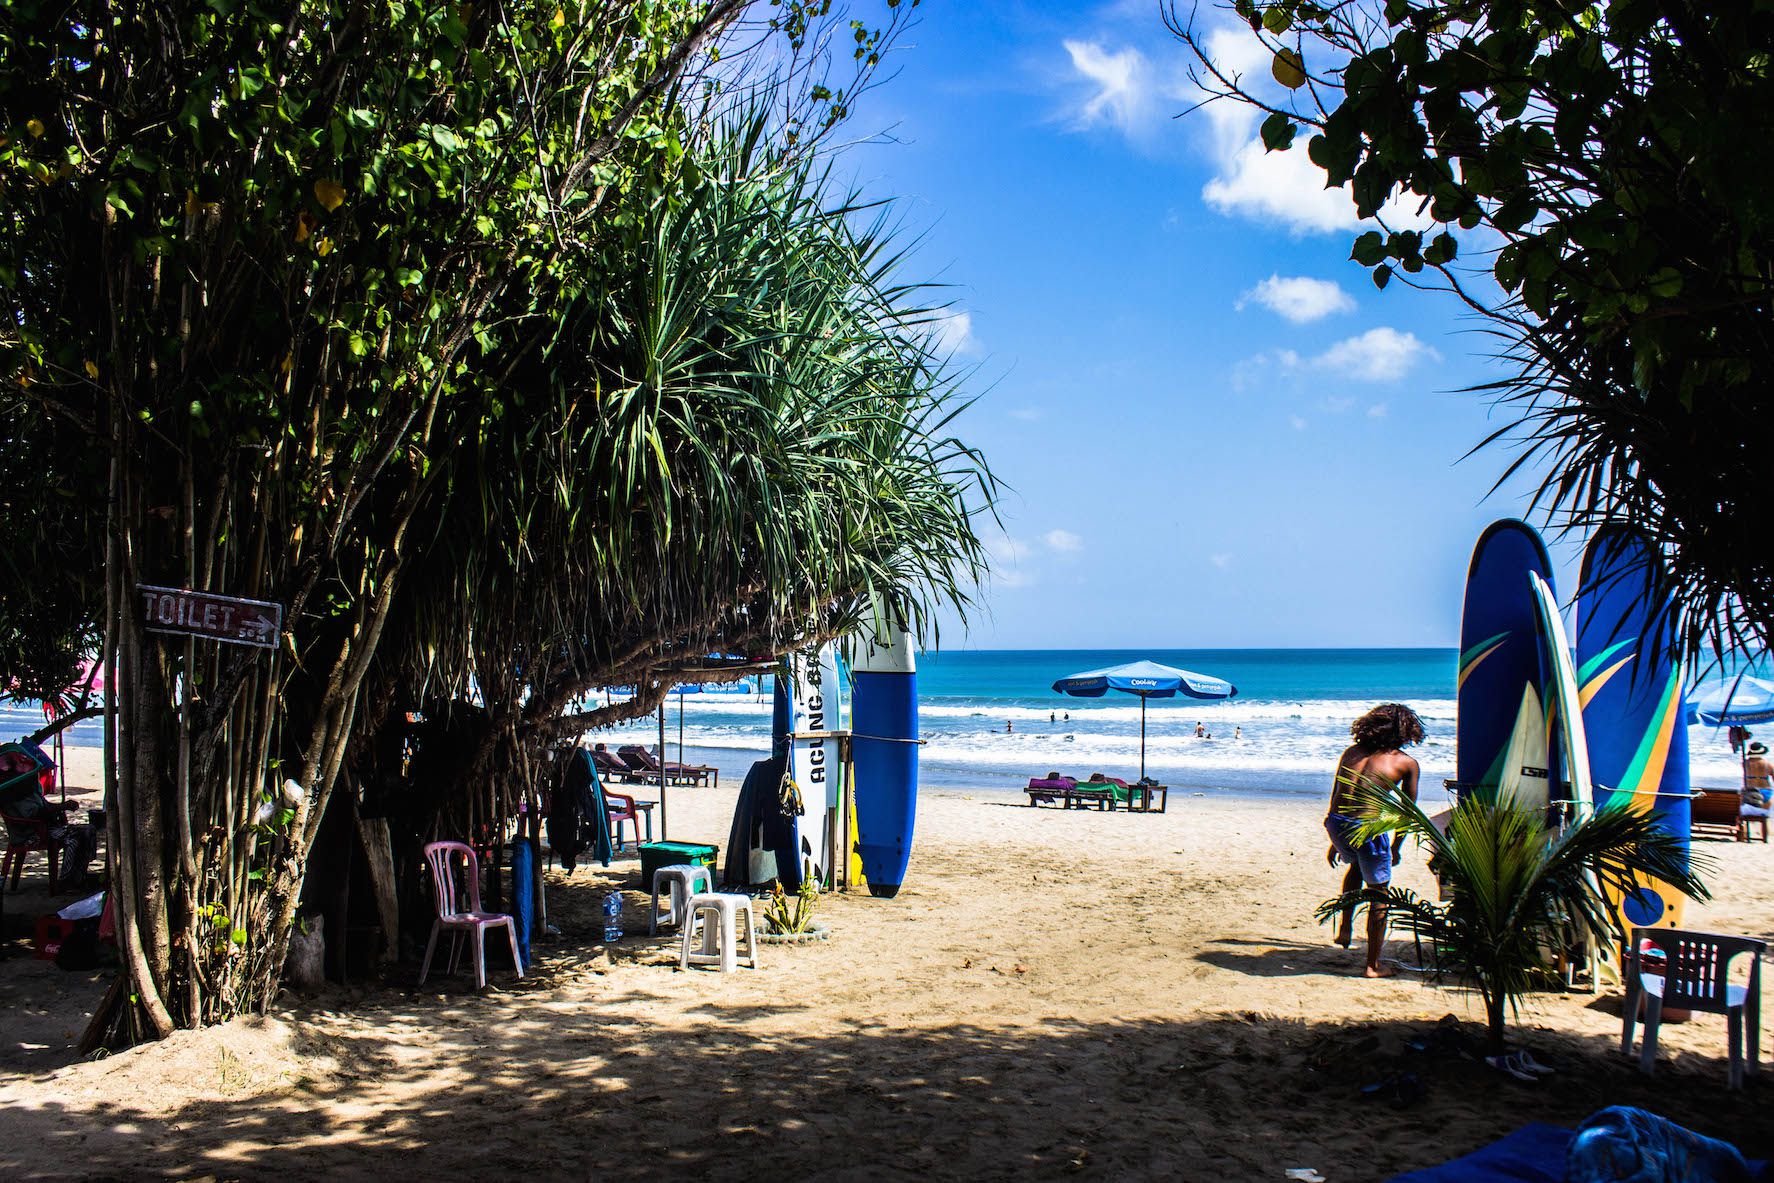 Surfing schools on Kuta Beach, Bali, Indonesia